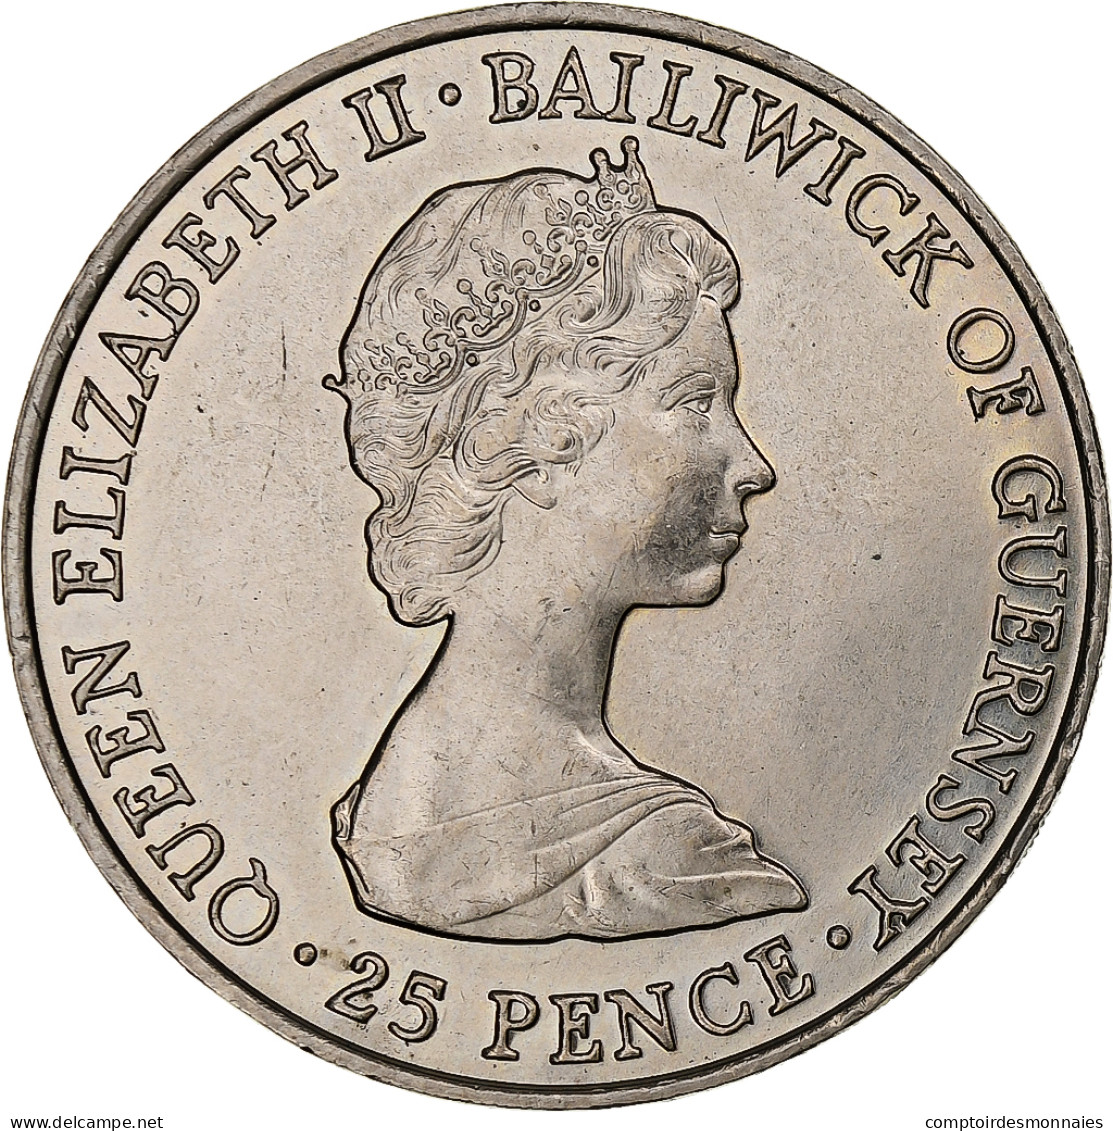 Monnaie, Guernesey, Elizabeth II, 25 Pence, 1981, Heaton, SUP+, Cupro-nickel - Guernsey